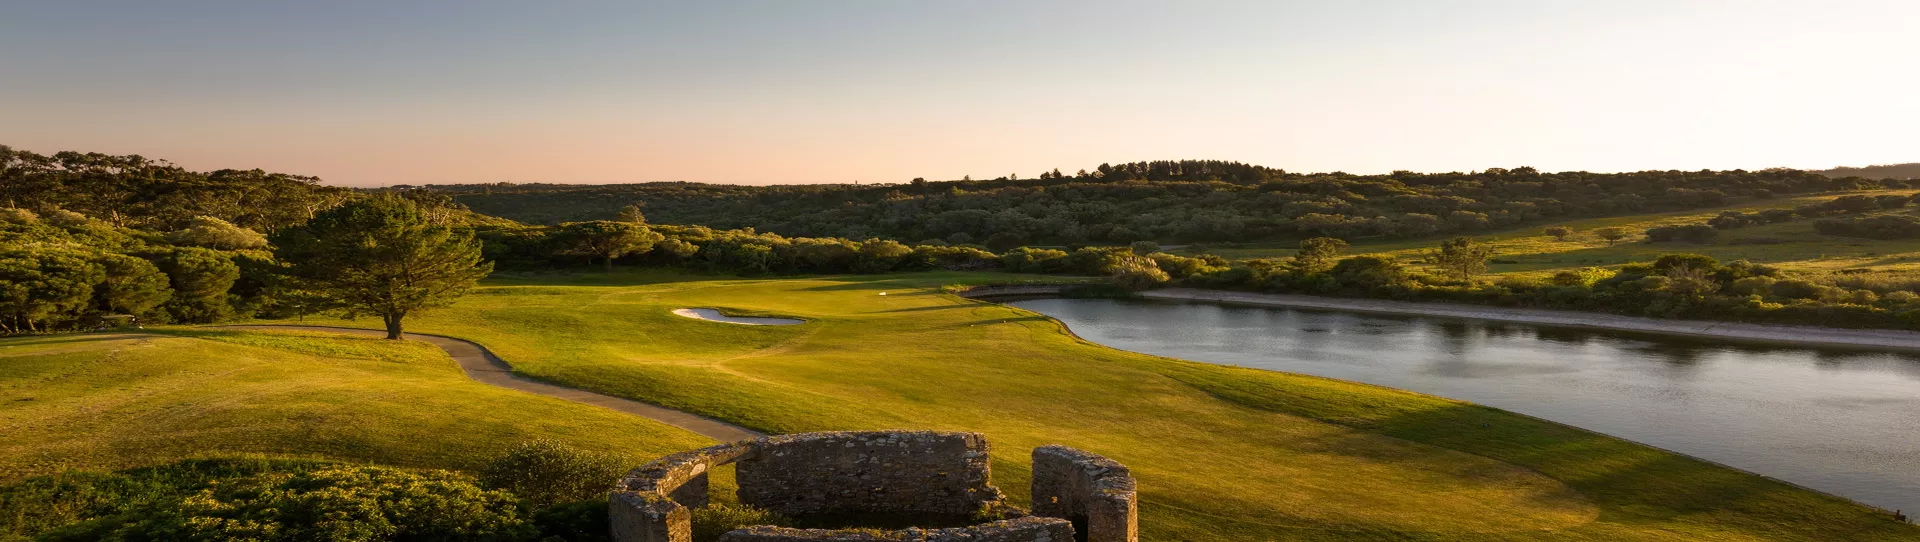 Portugal golf holidays - Penha Longa Twix Experience - Photo 1